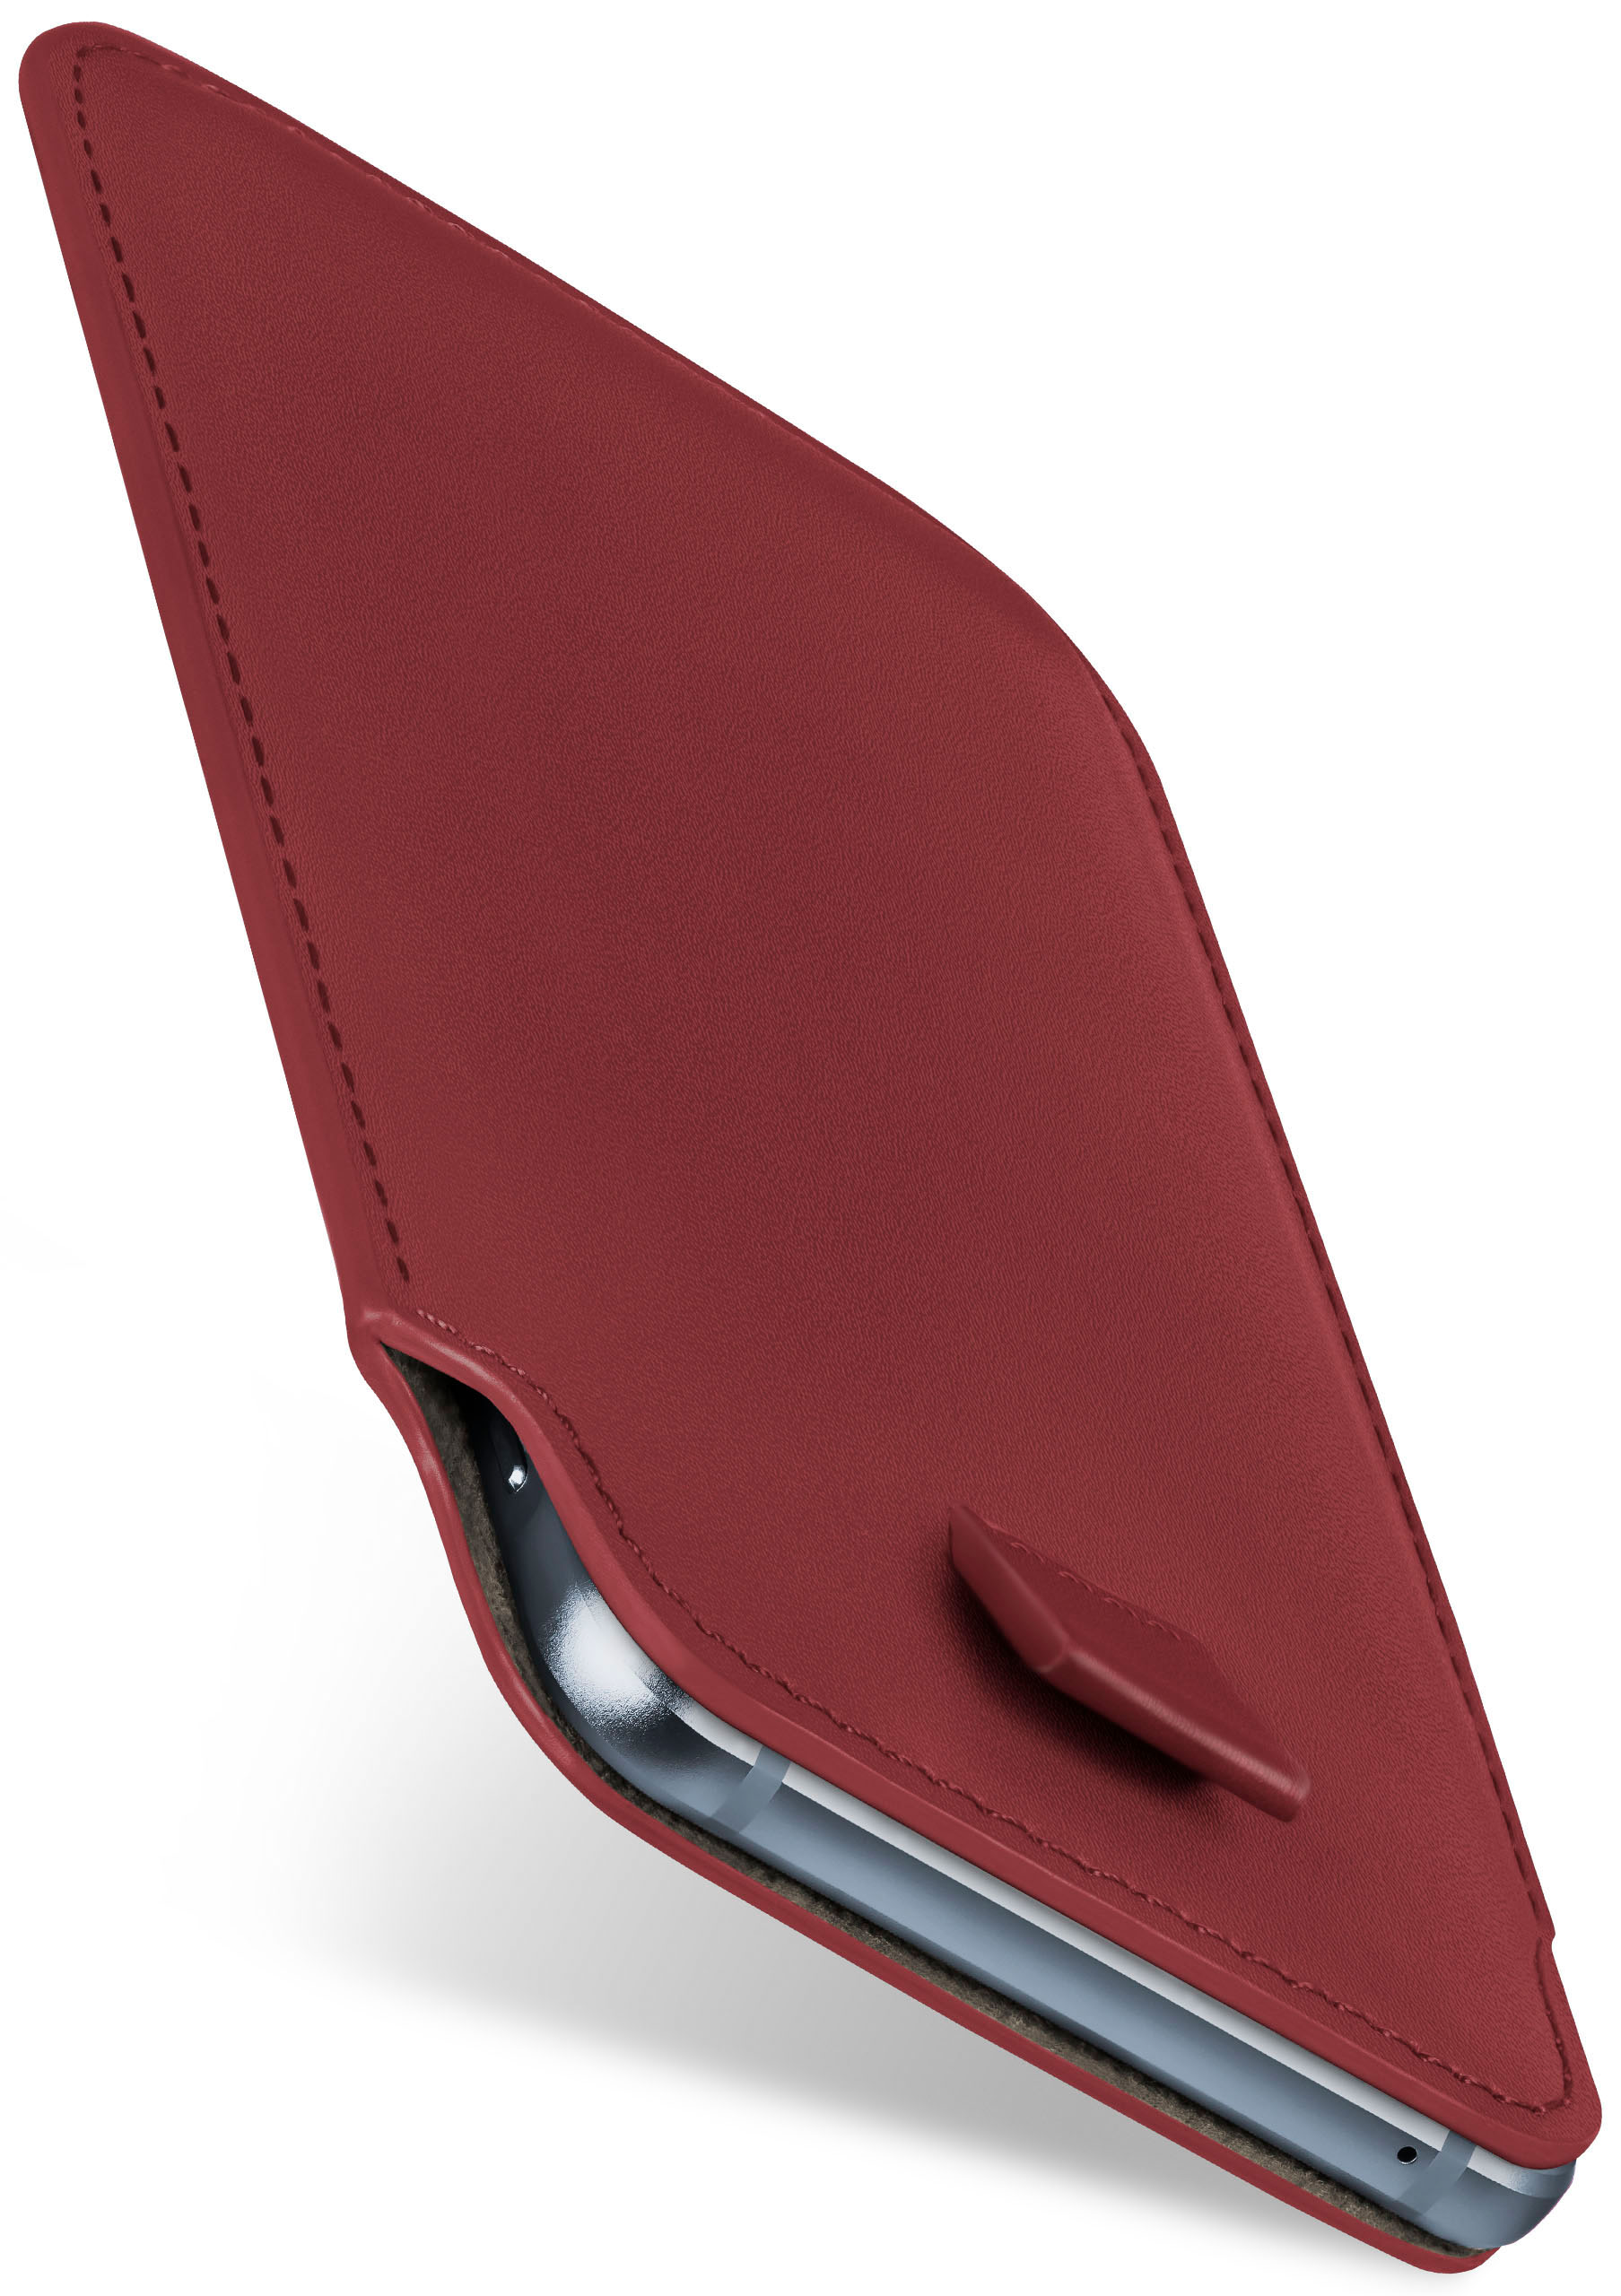 MOEX Slide Case, Full Cover, 4G, 8110 Nokia, Maroon-Red